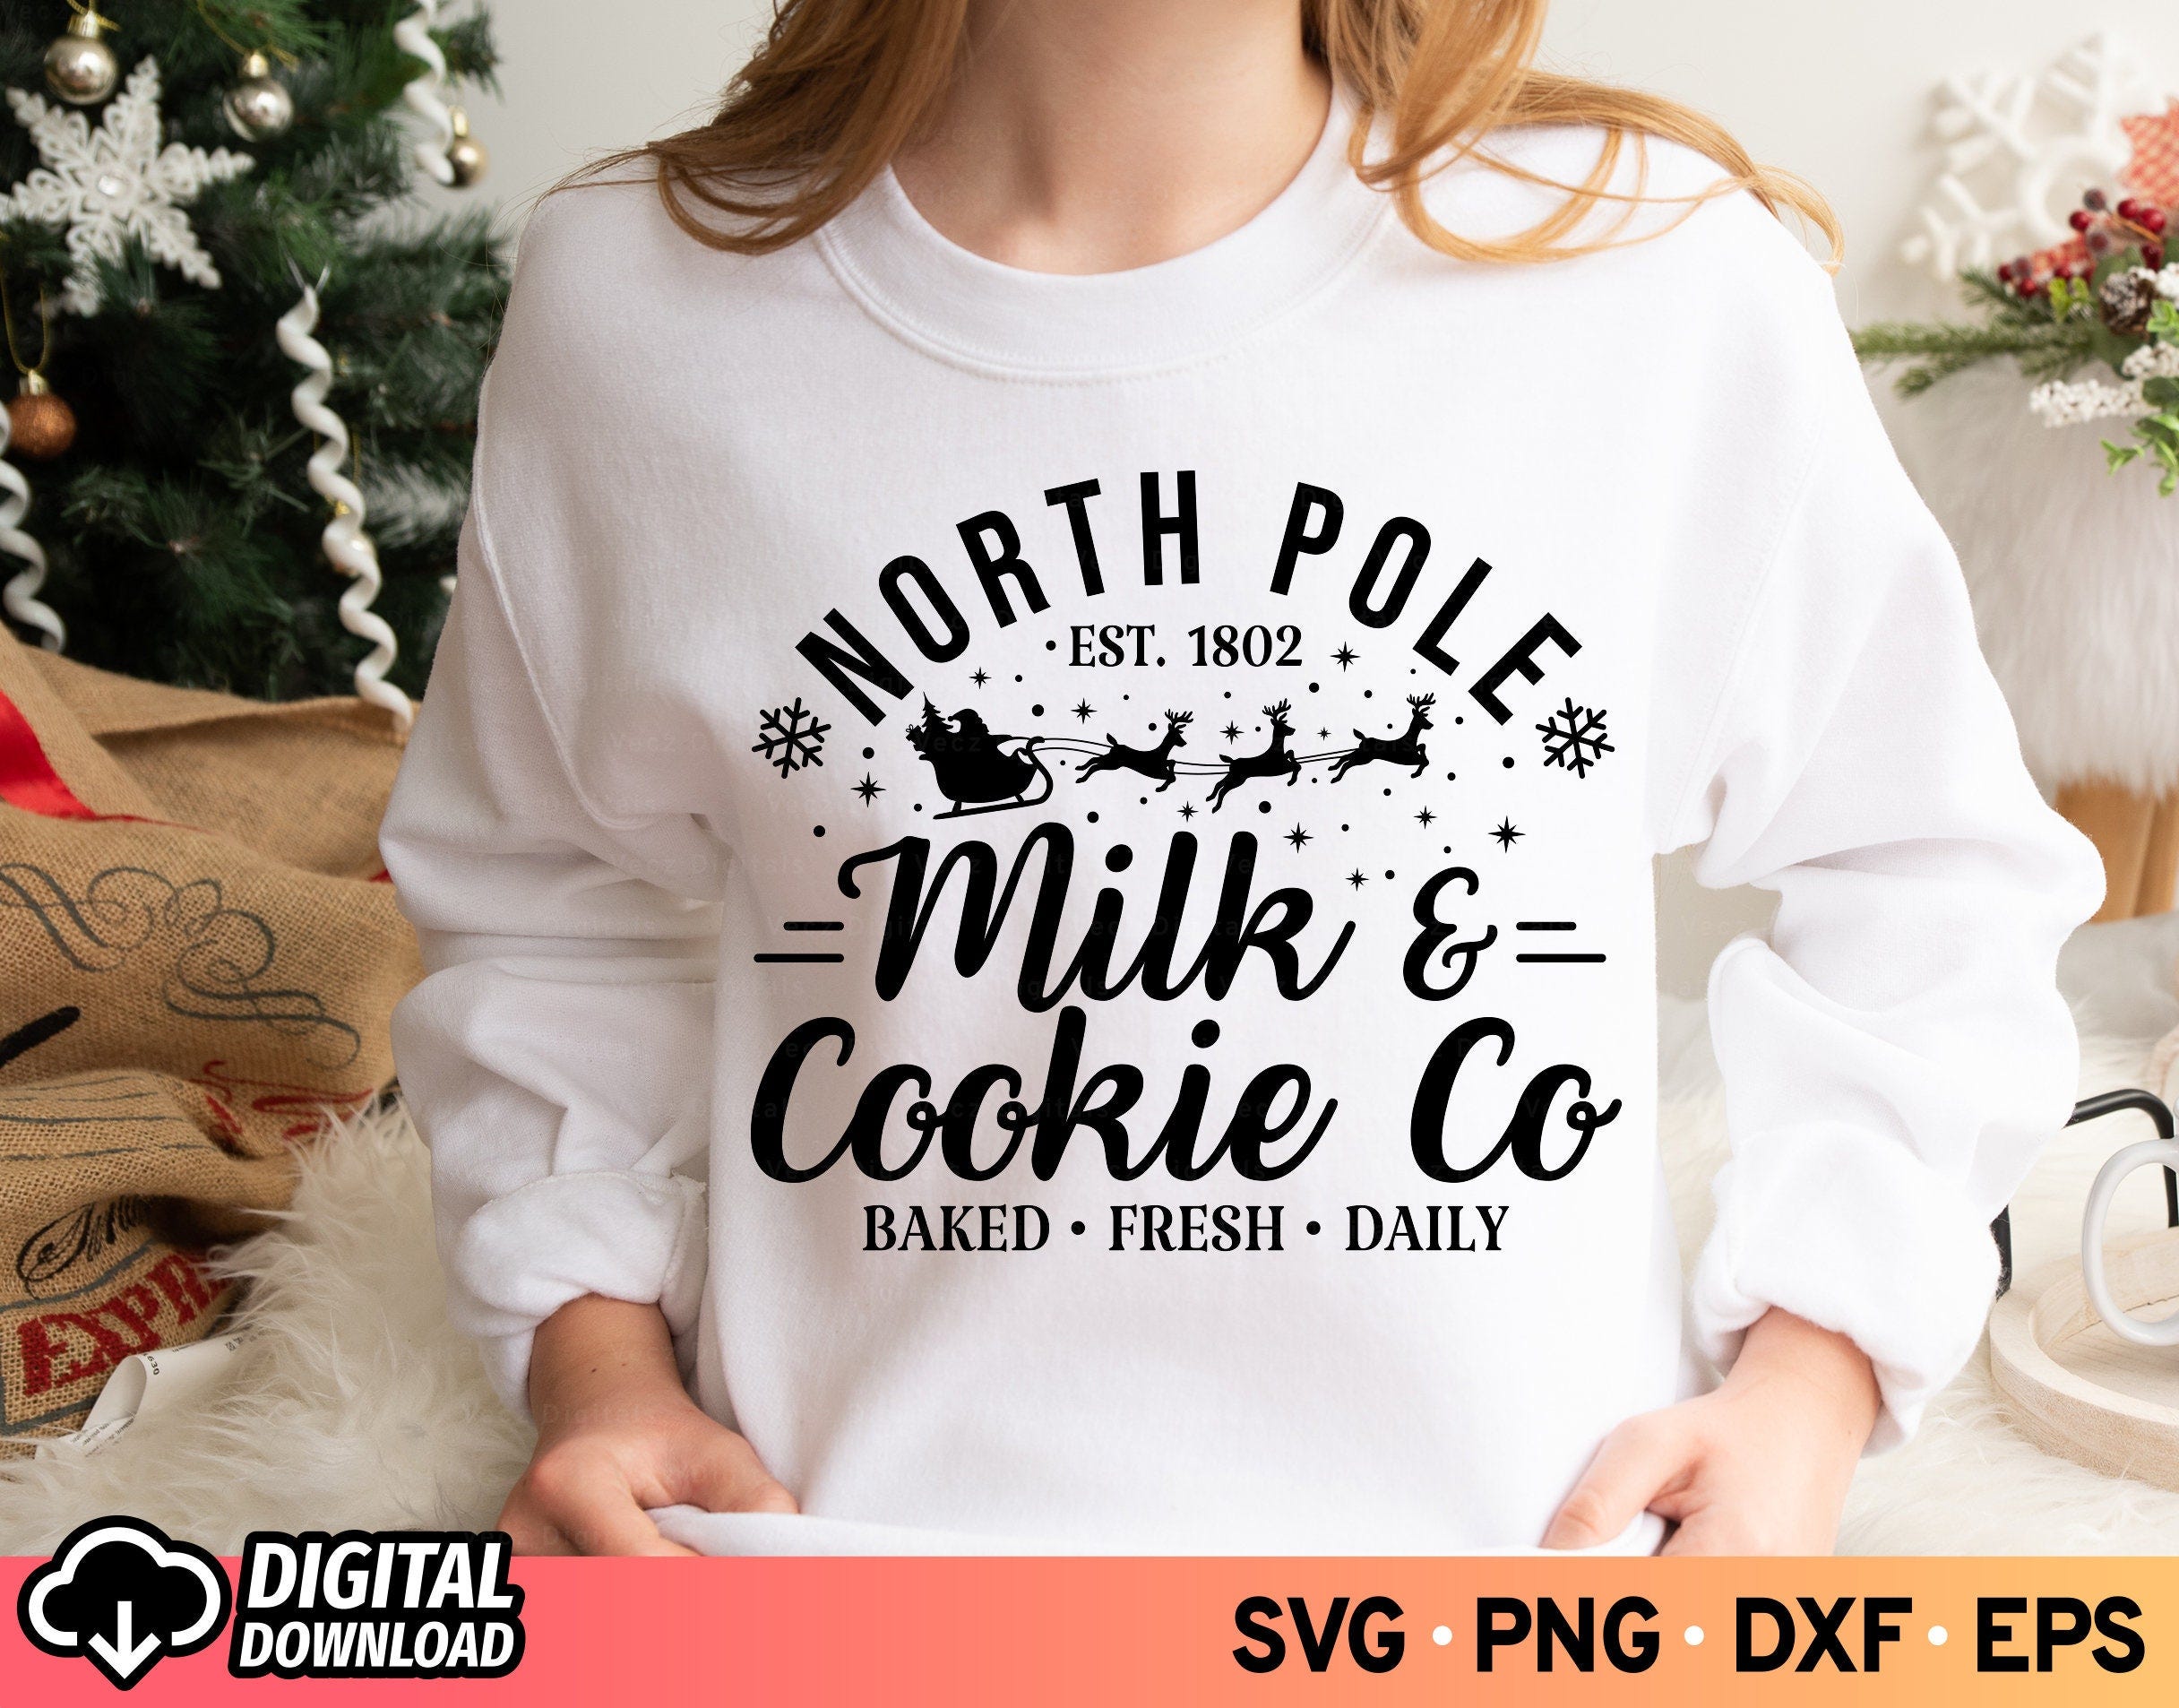 North Pole Milk Cookie Co SVG, Christmas Shirt Svg, Christmas Deer Svg, Sleigh rides Svg, Holiday Svg, Christmas Svg Files, Santa Claus Png